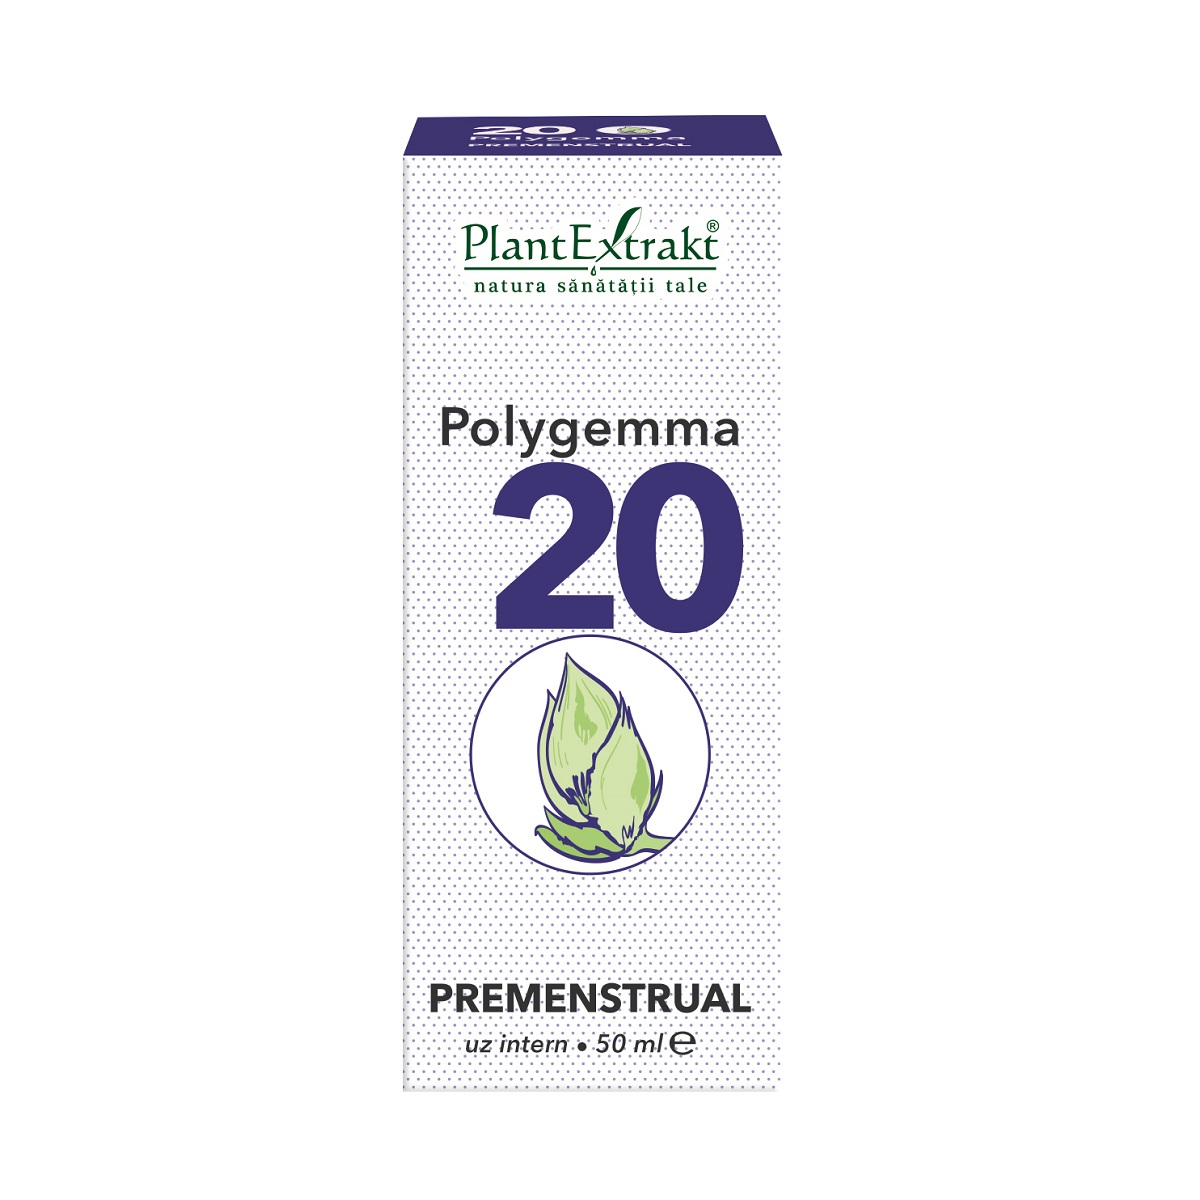 Extracte, tincturi - Polygemma 20, Premenstrual, 50 ml, Plant Extrakt , nordpharm.ro